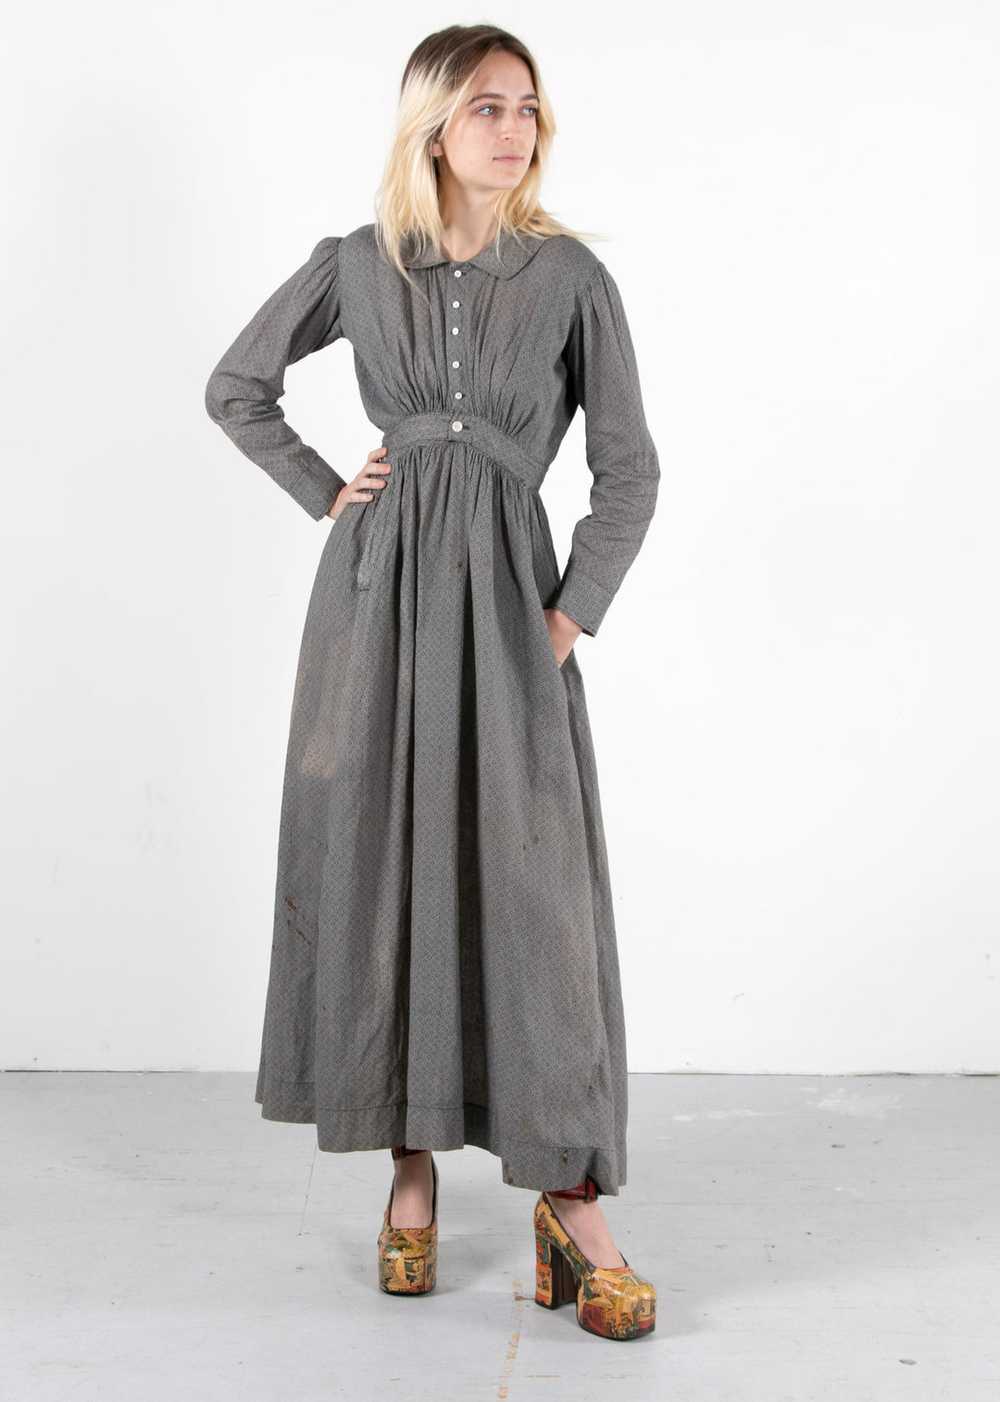 Antique 1900's Grey Calico Dress Long Sleeve Floo… - image 1